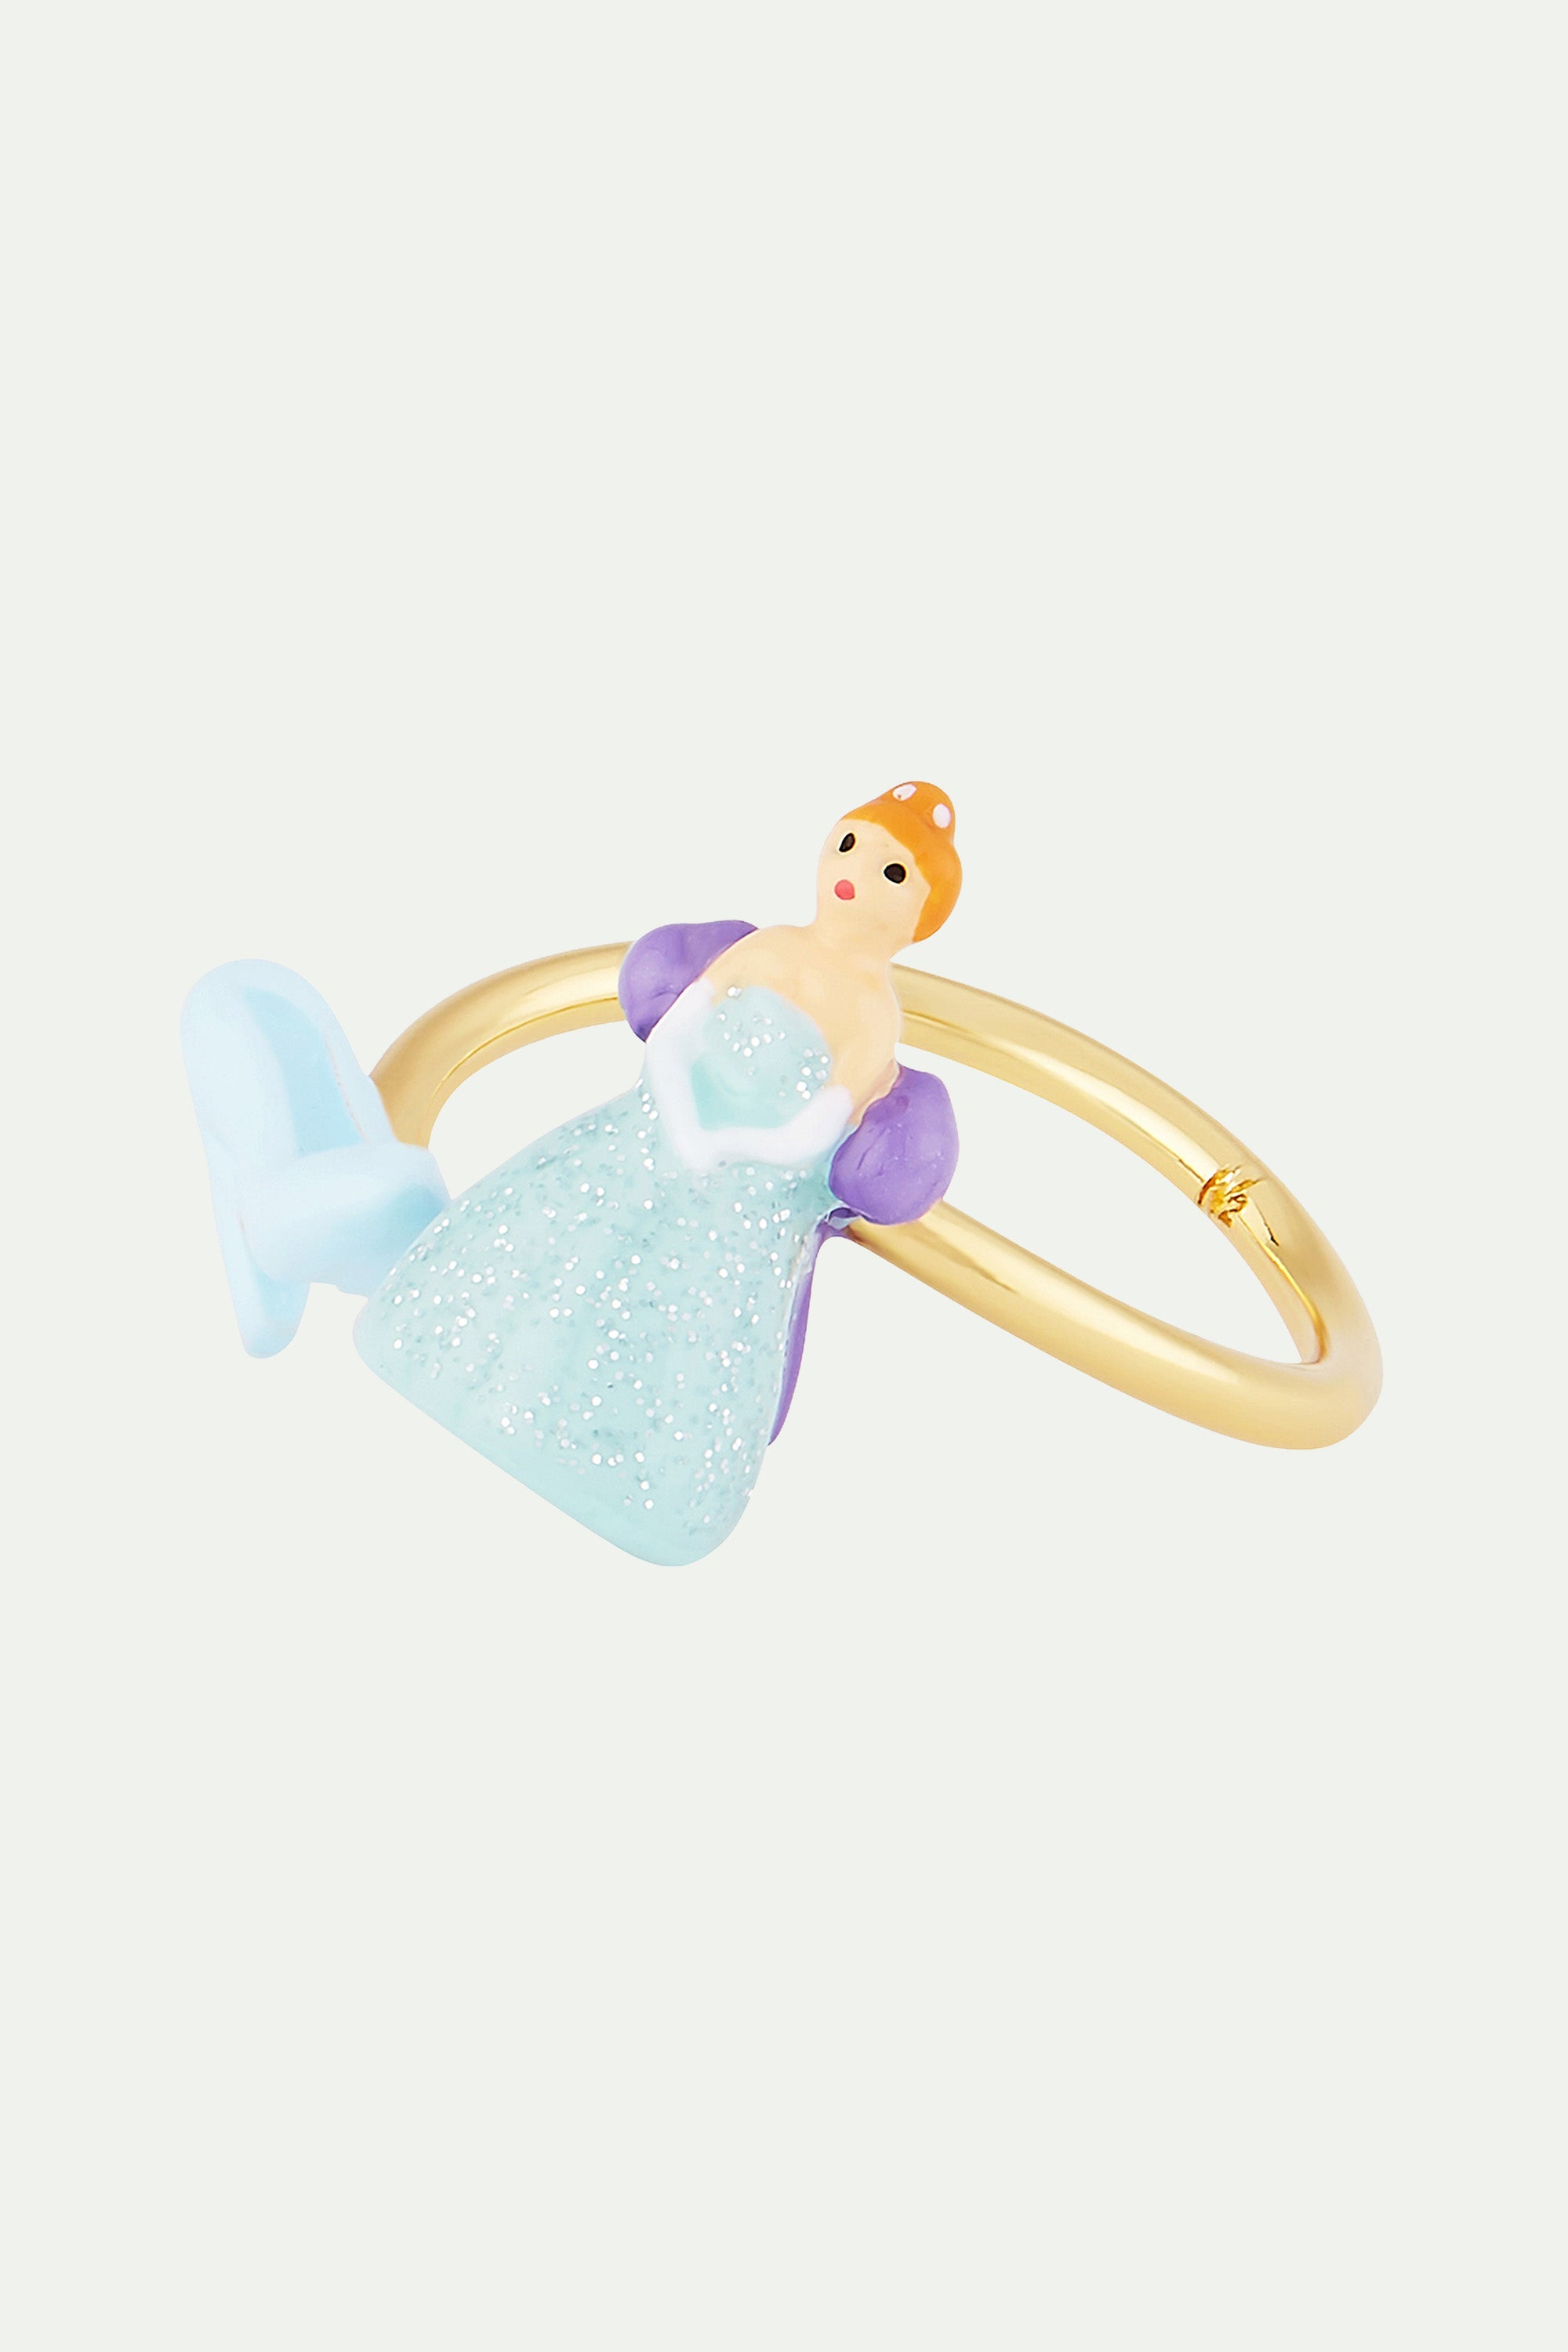 Cinderella and Slipper adjustable ring